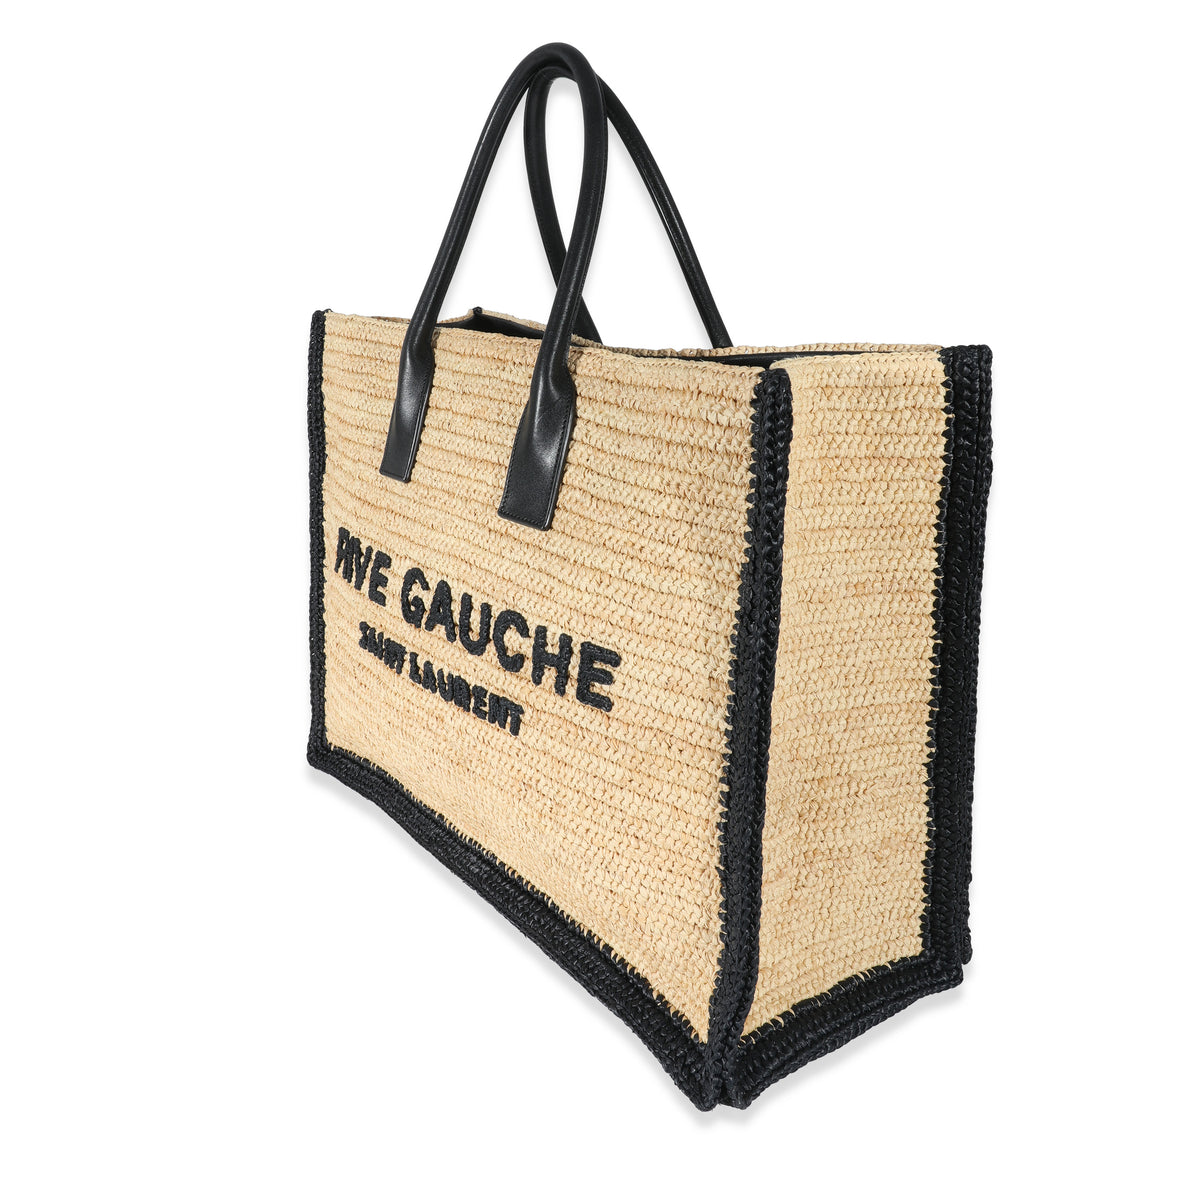 Saint Laurent Pre-Owned 2022 Rive Gauche tote bag